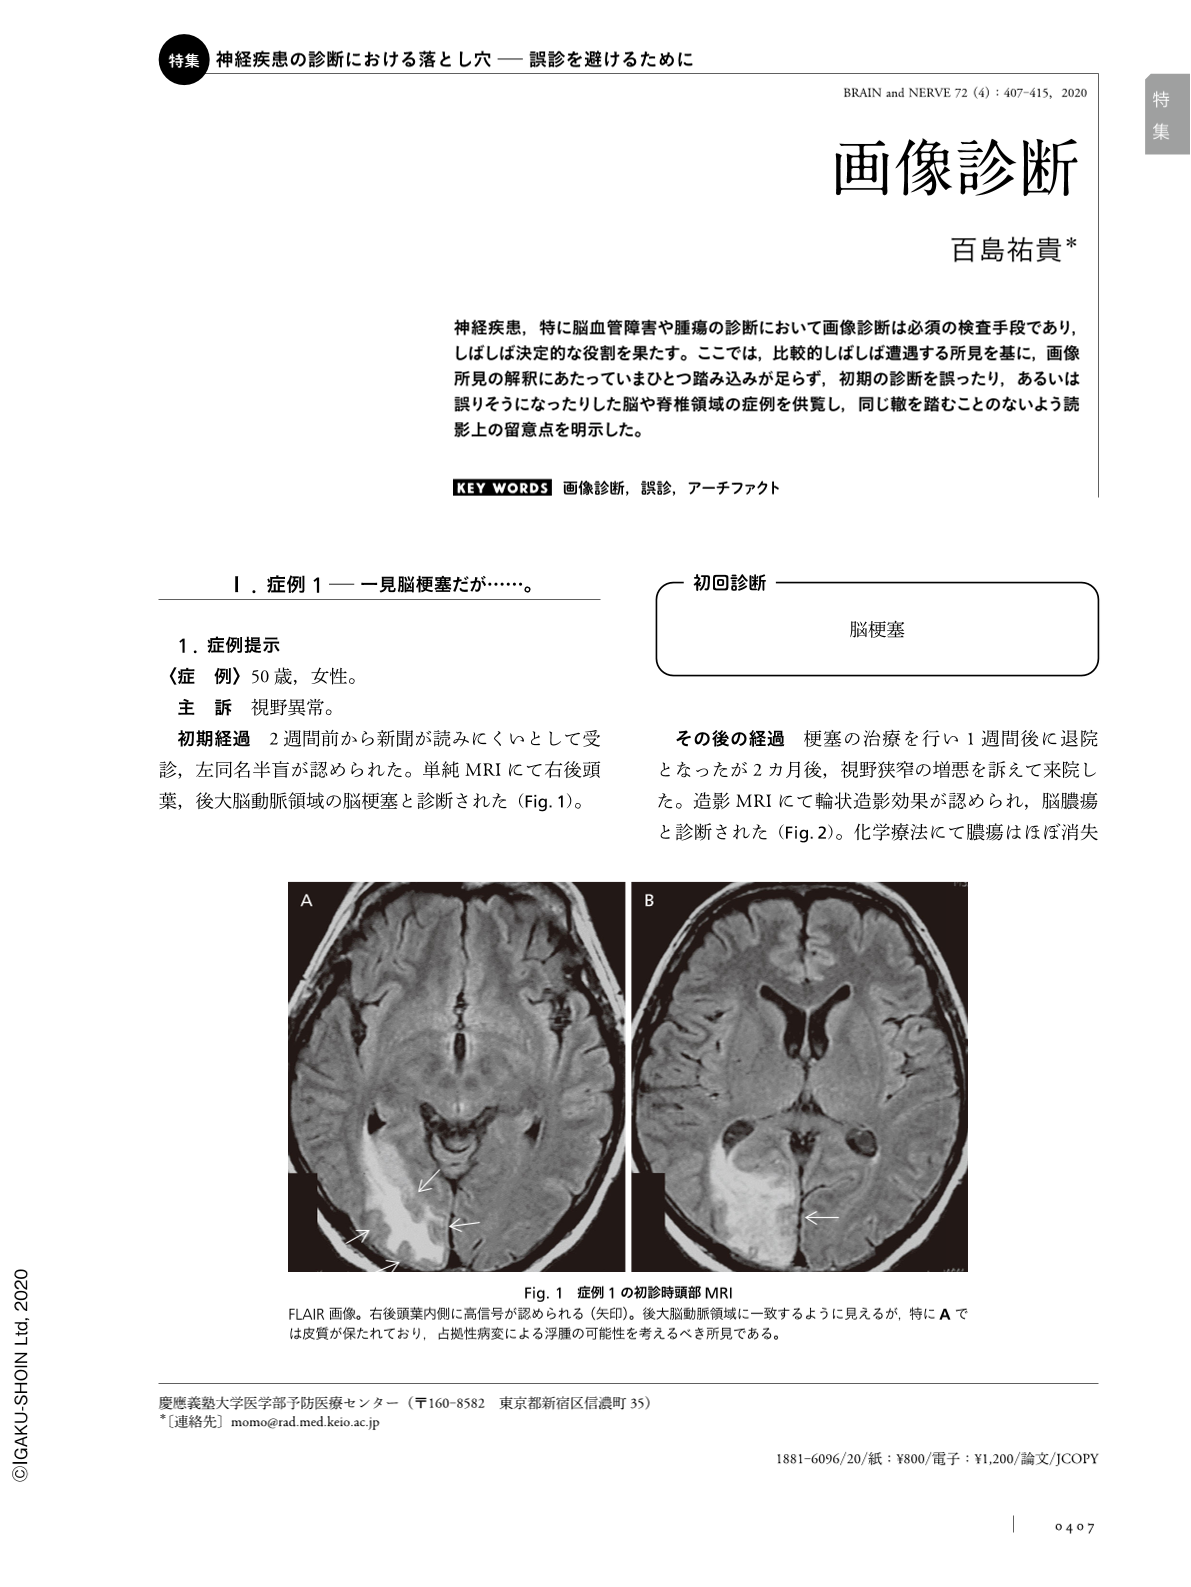 画像診断 (BRAIN and NERVE 72巻4号) | 医書.jp